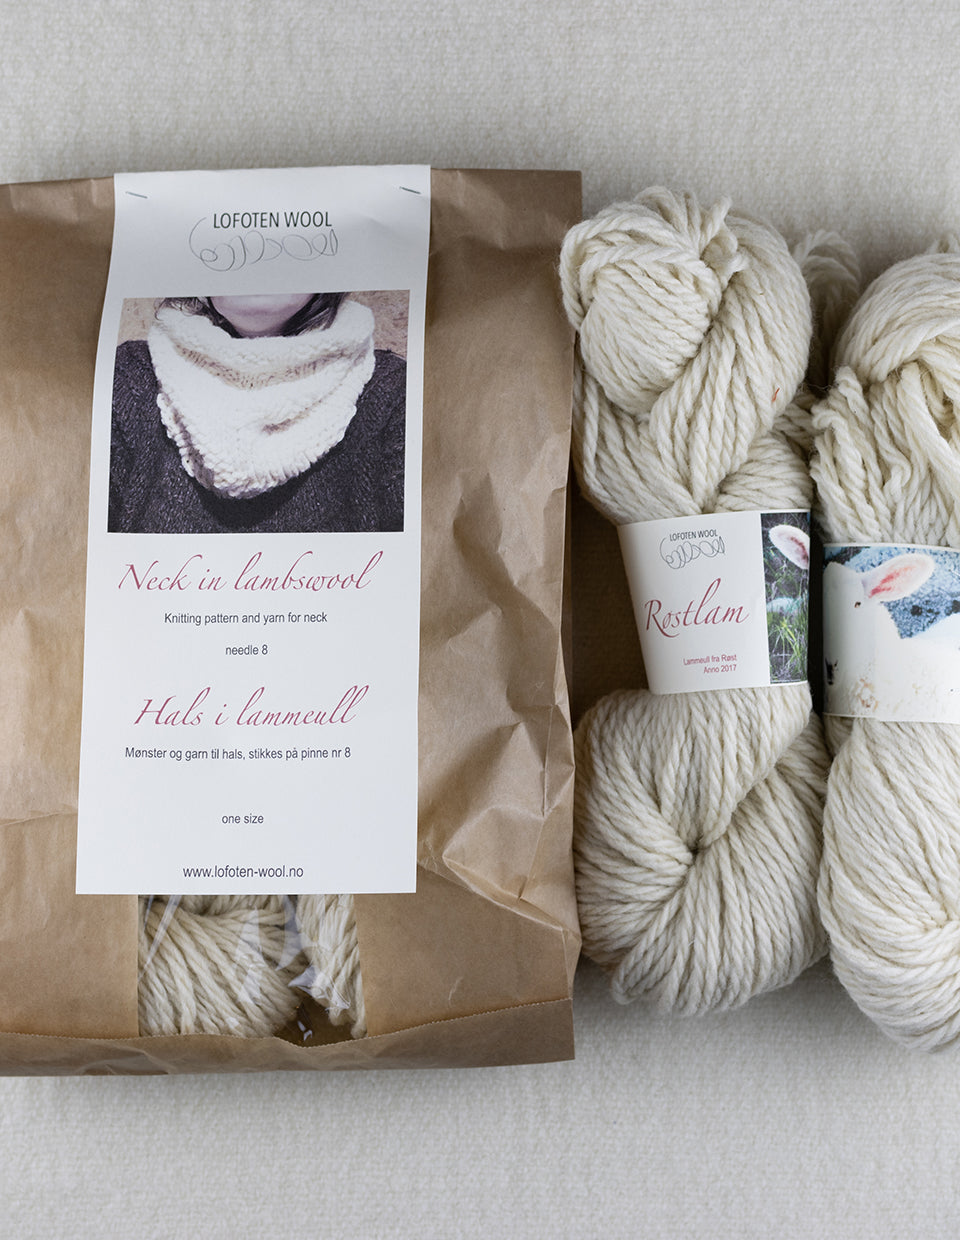 Neck cowl in lambswool, knitting kit